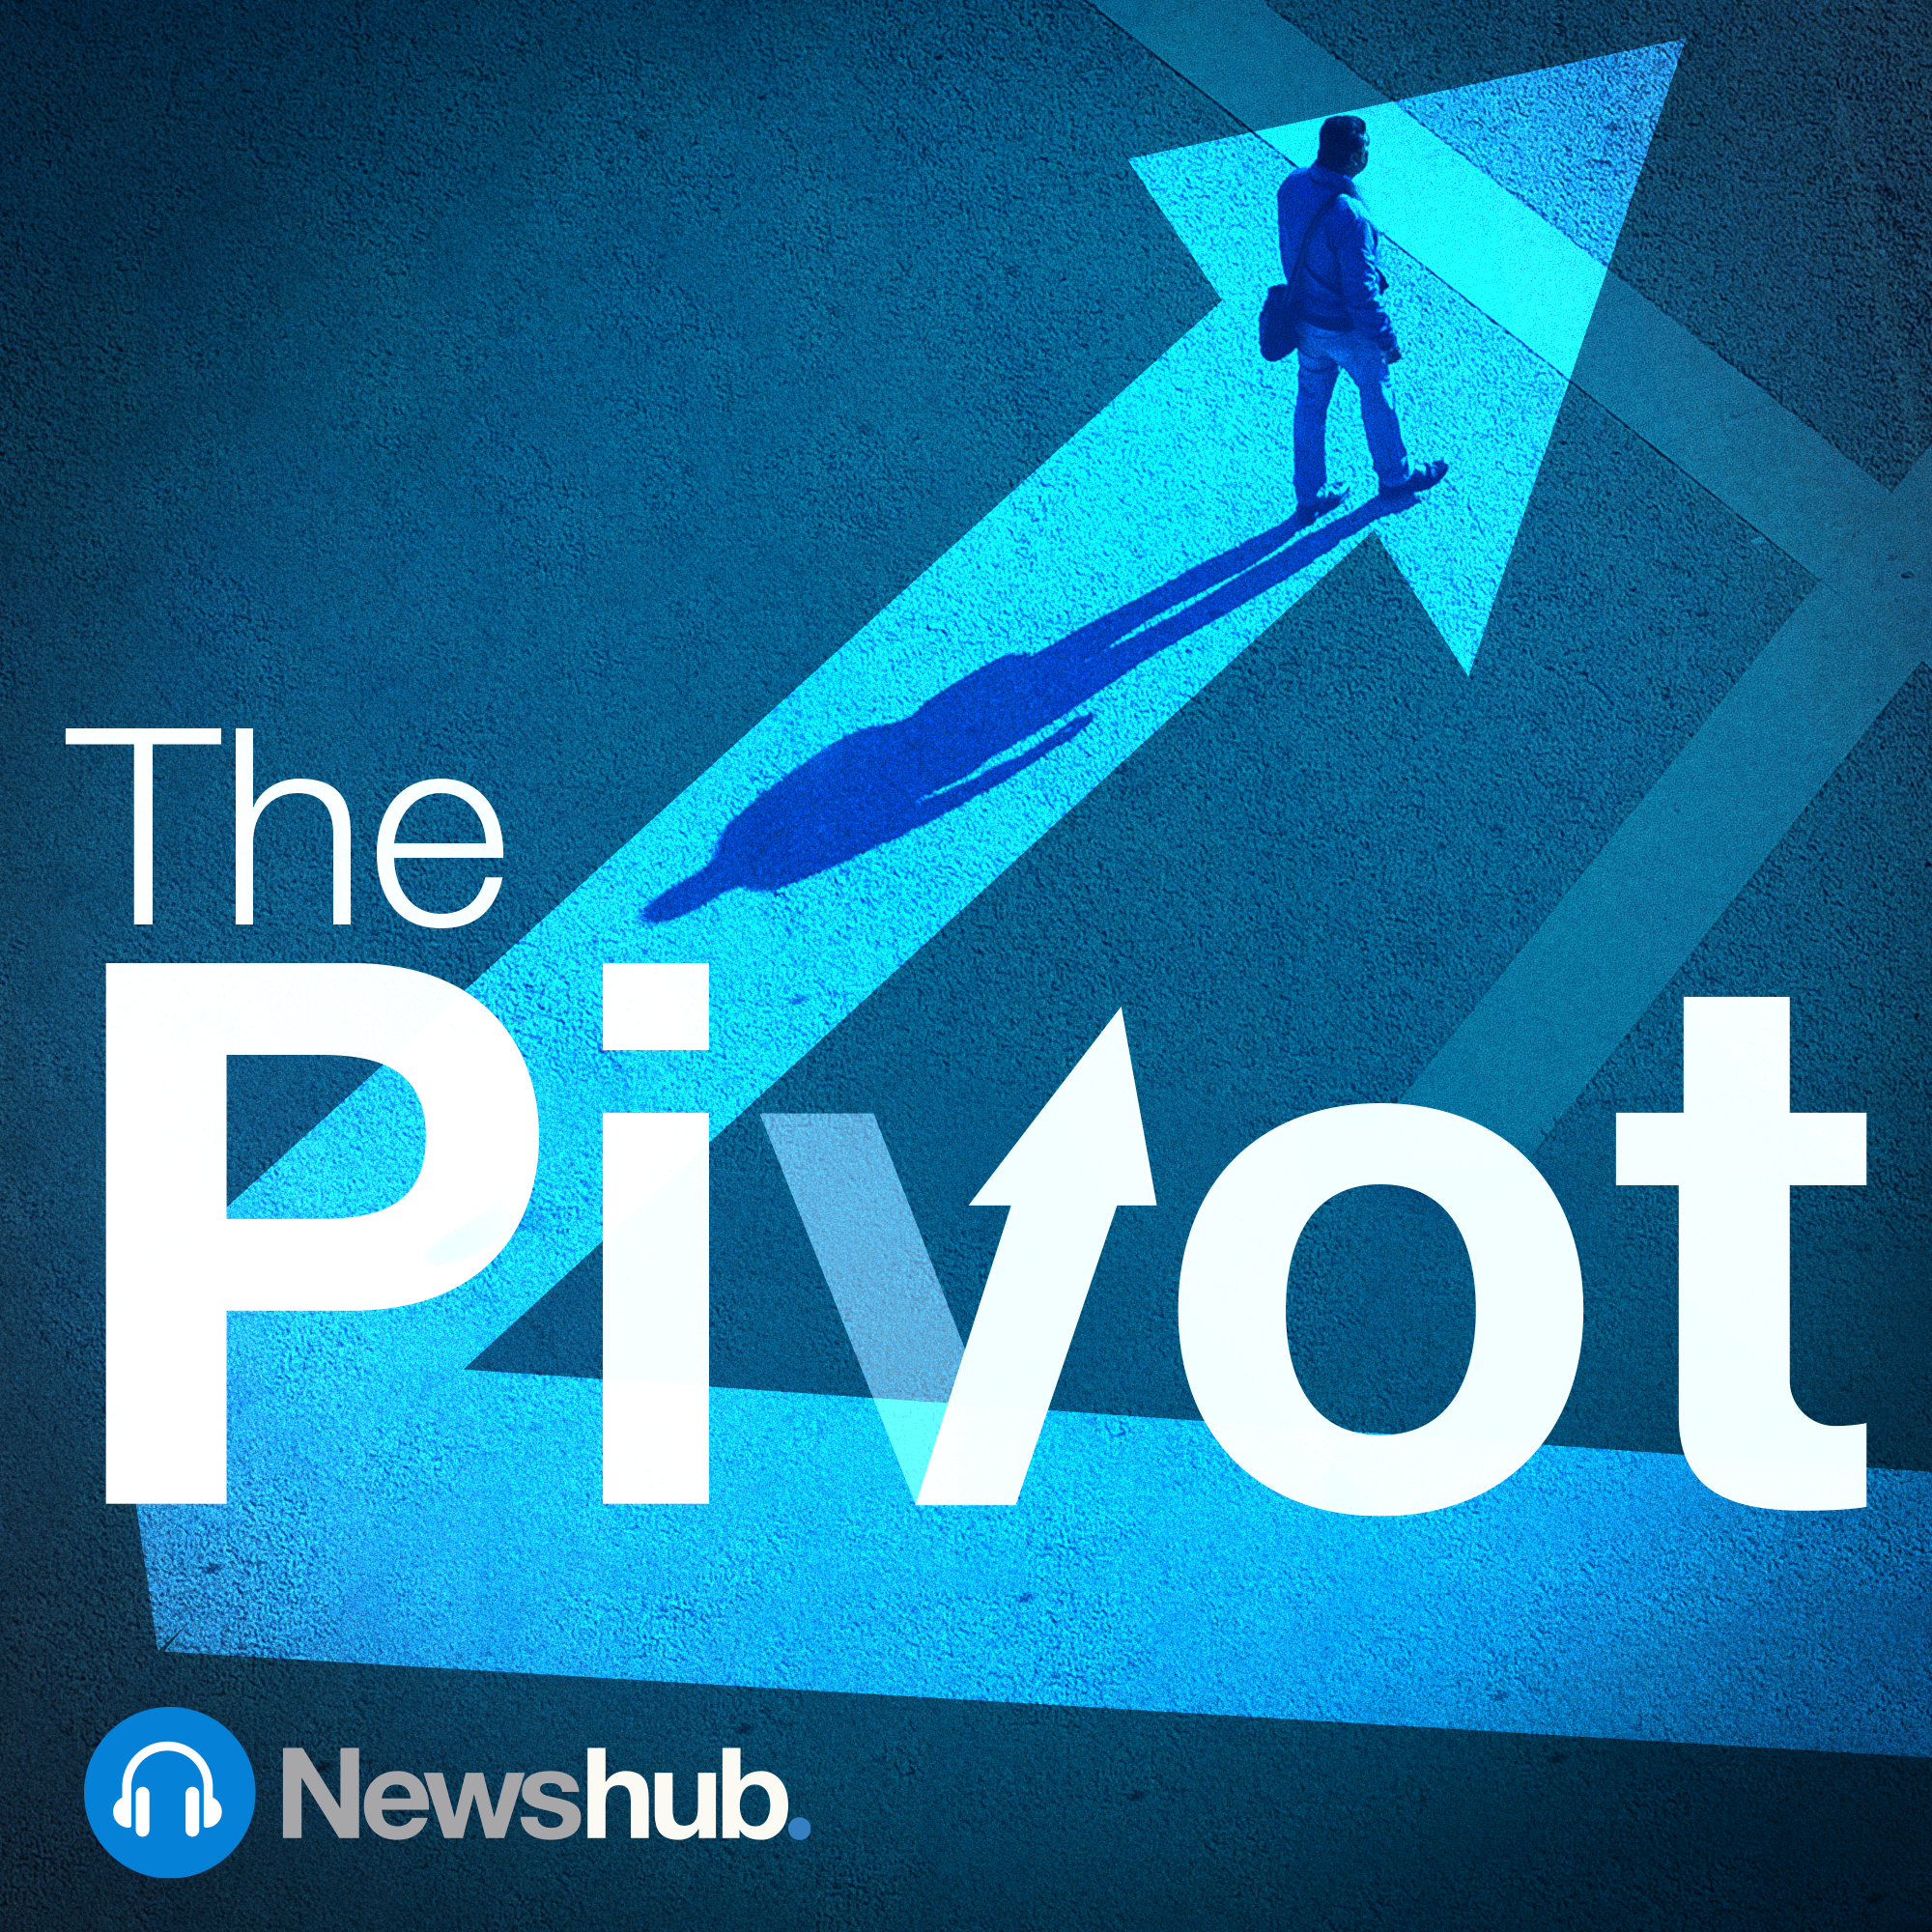 Coming soon: Newshub's The Pivot